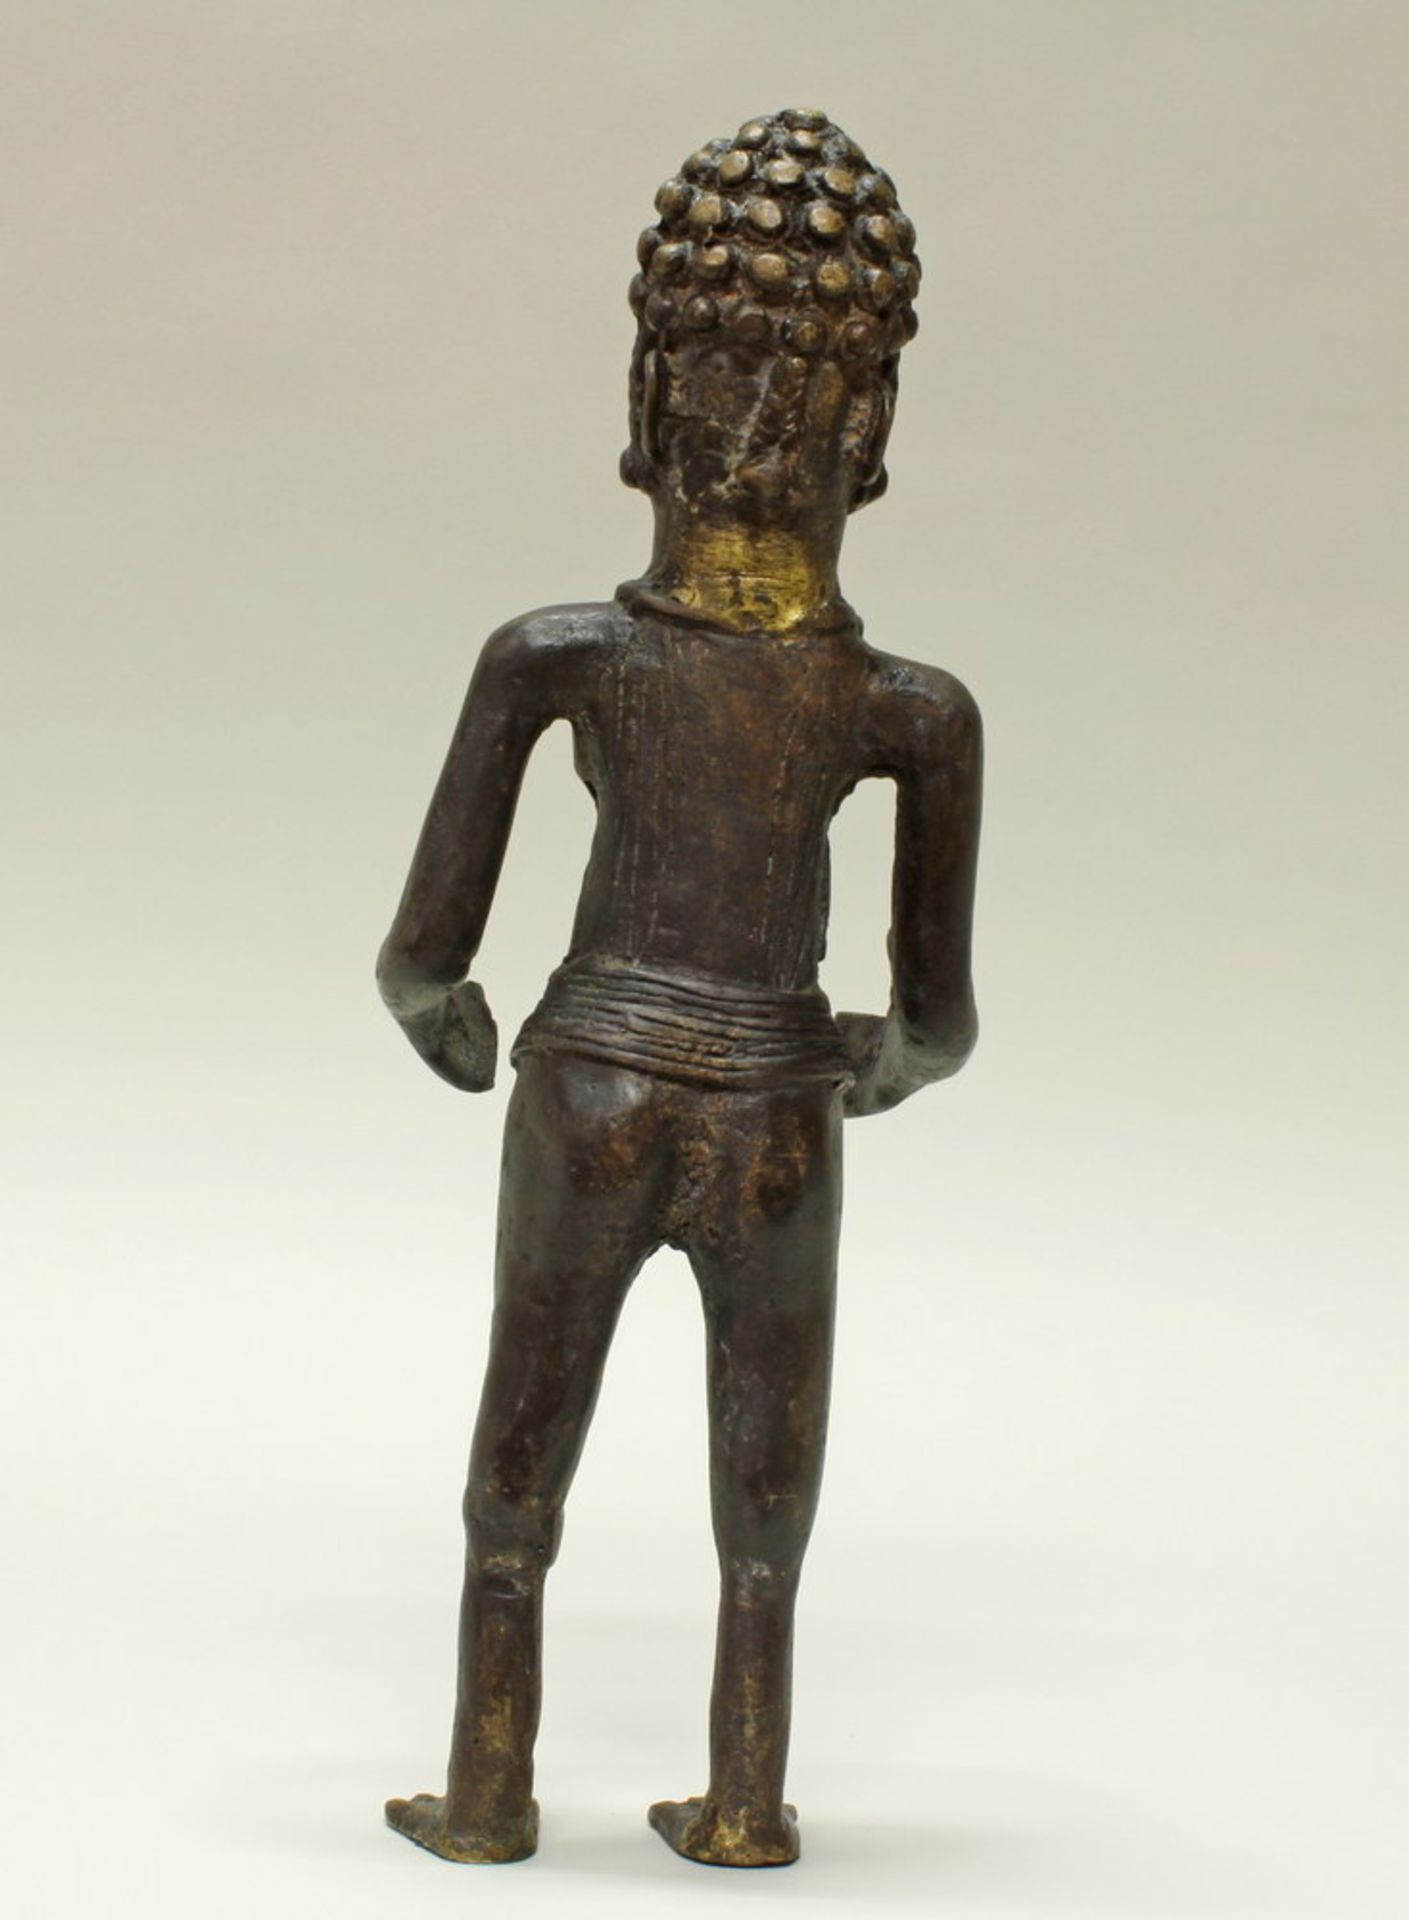 Bronzeskulptur, "Afrikaner", Benin, Afrika, 43 cm hoch- - -25.00 % buyer's premium on the hammer - Image 6 of 6